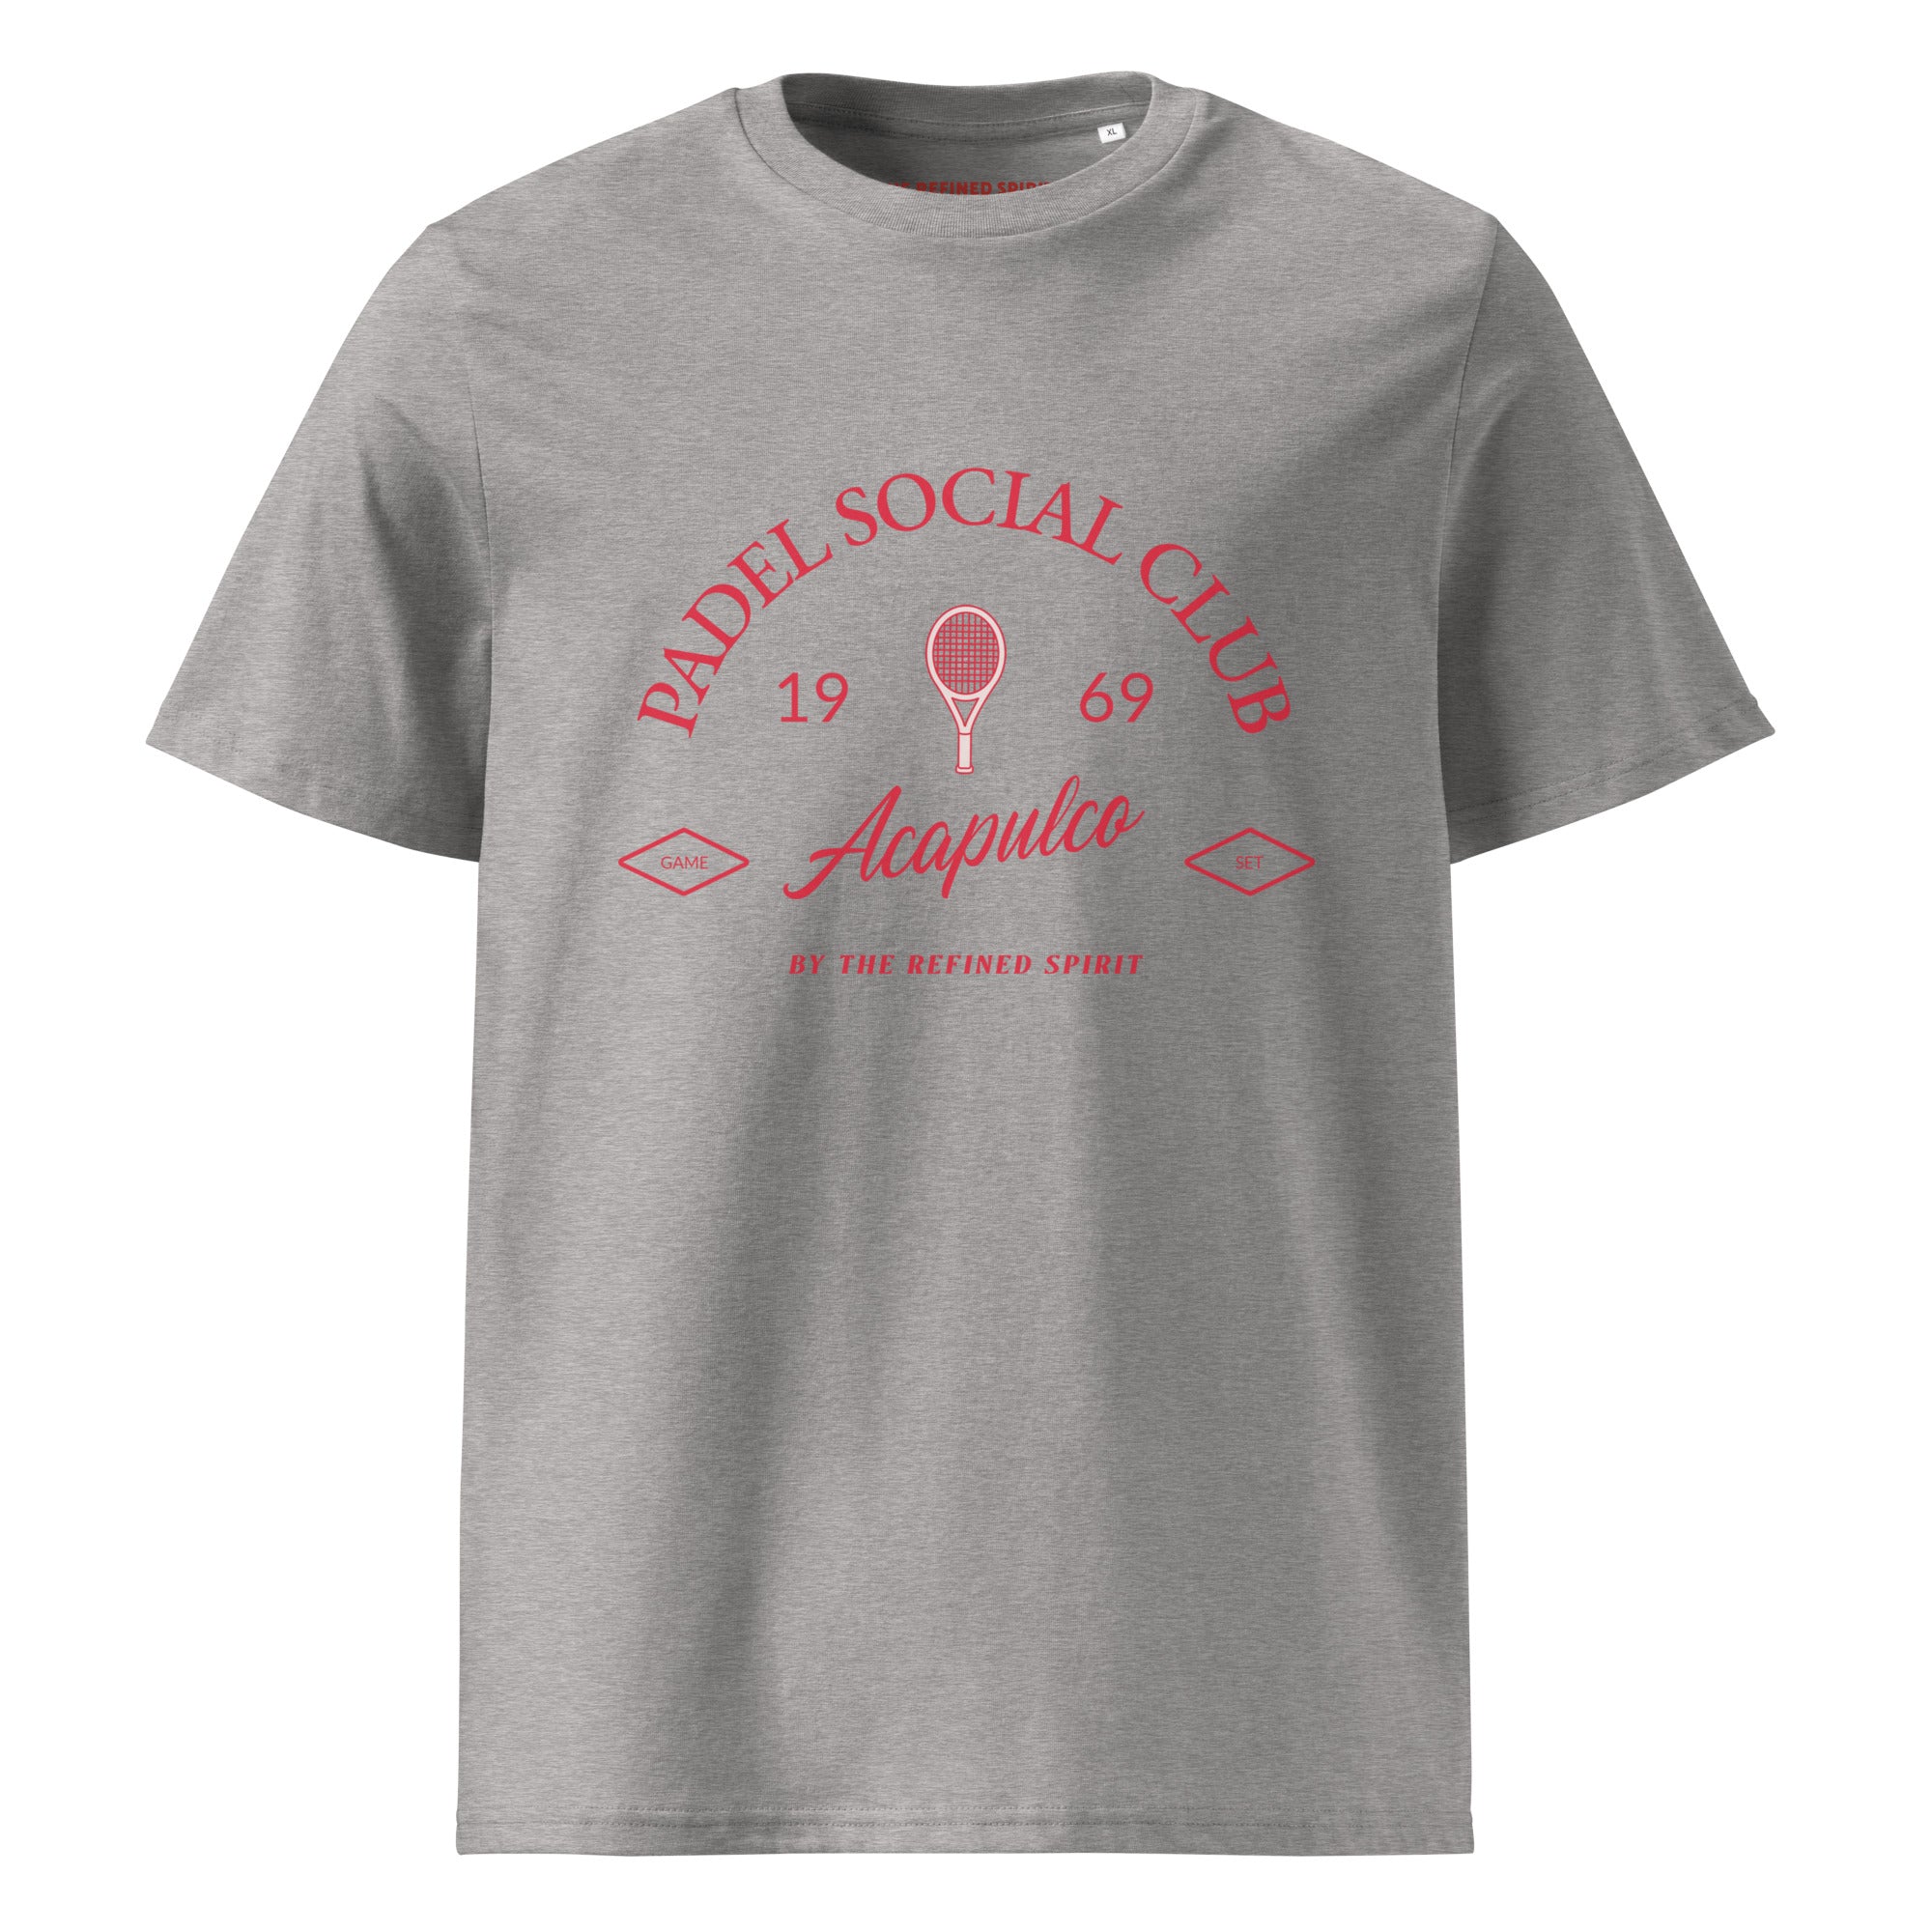 Padel Social Club - Organic T-shirt